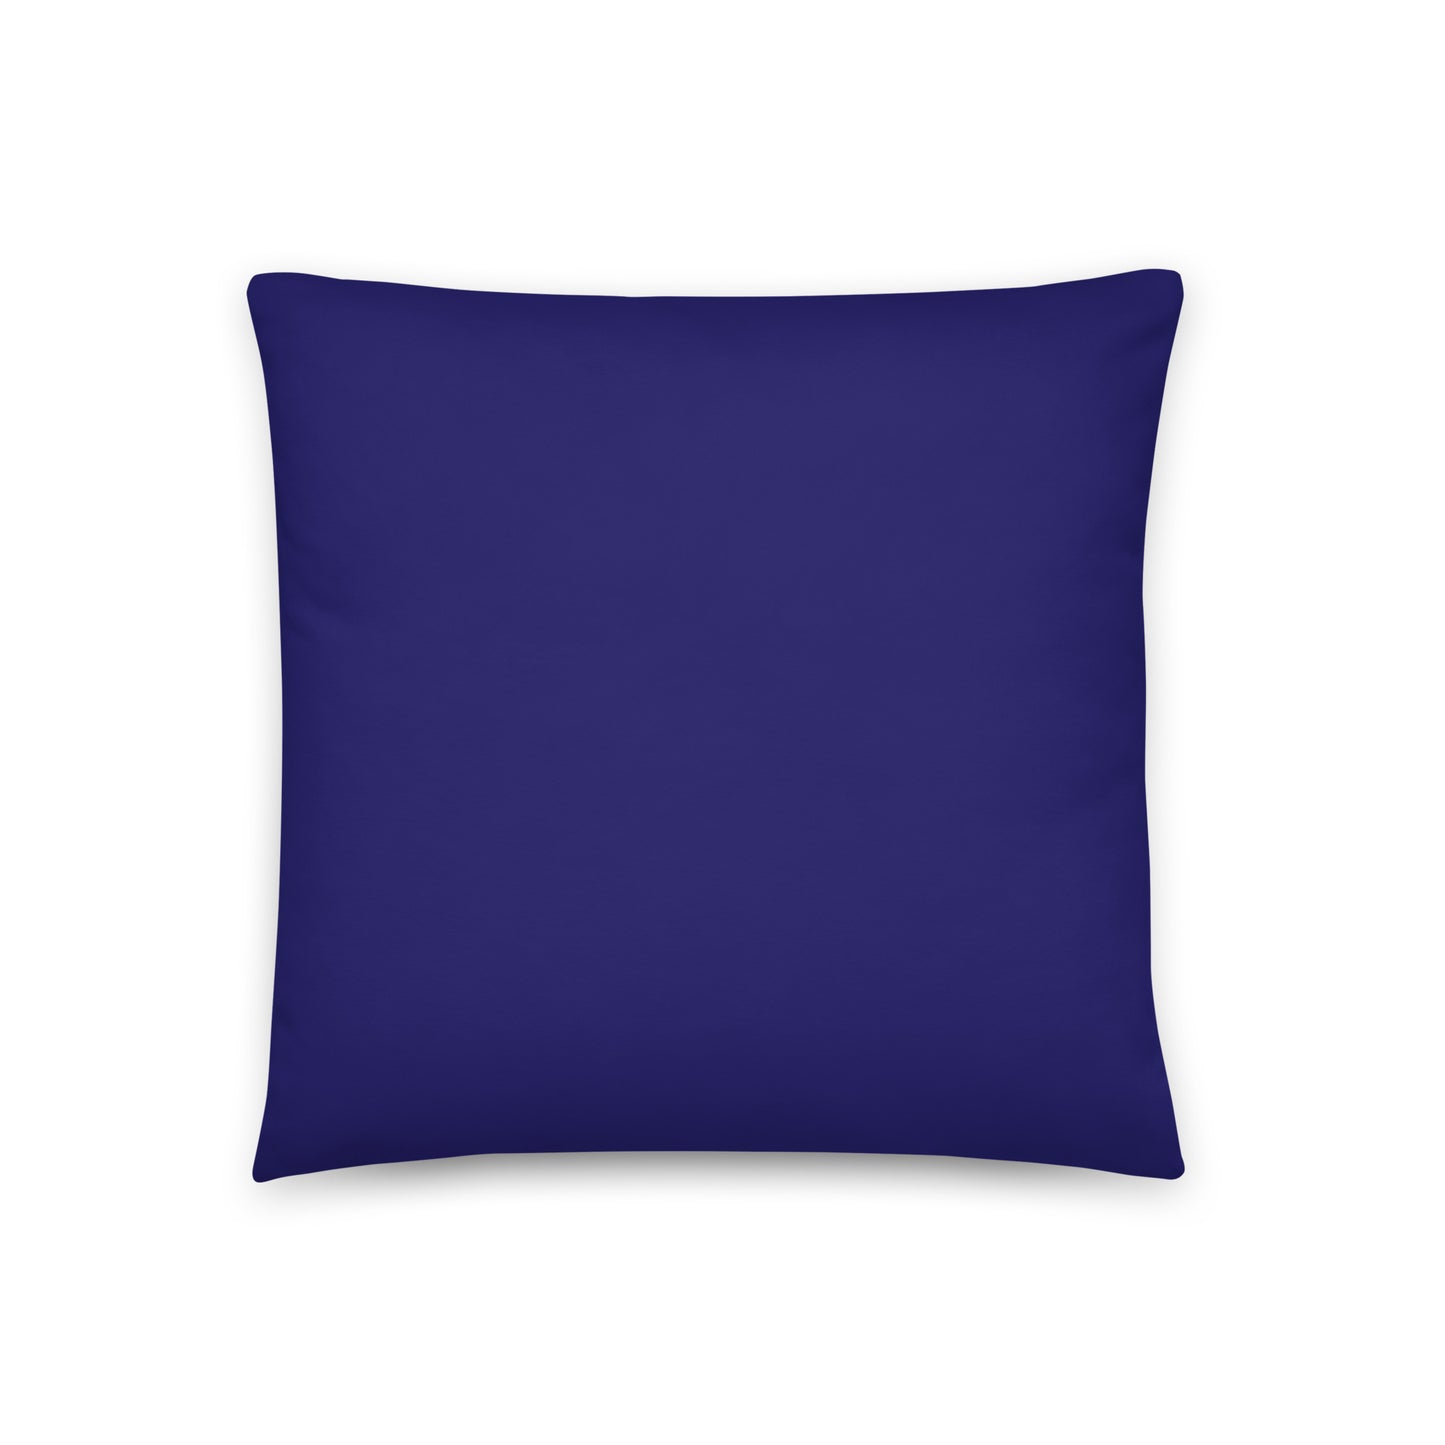 Australia Flag - Sustainably Made Pillows